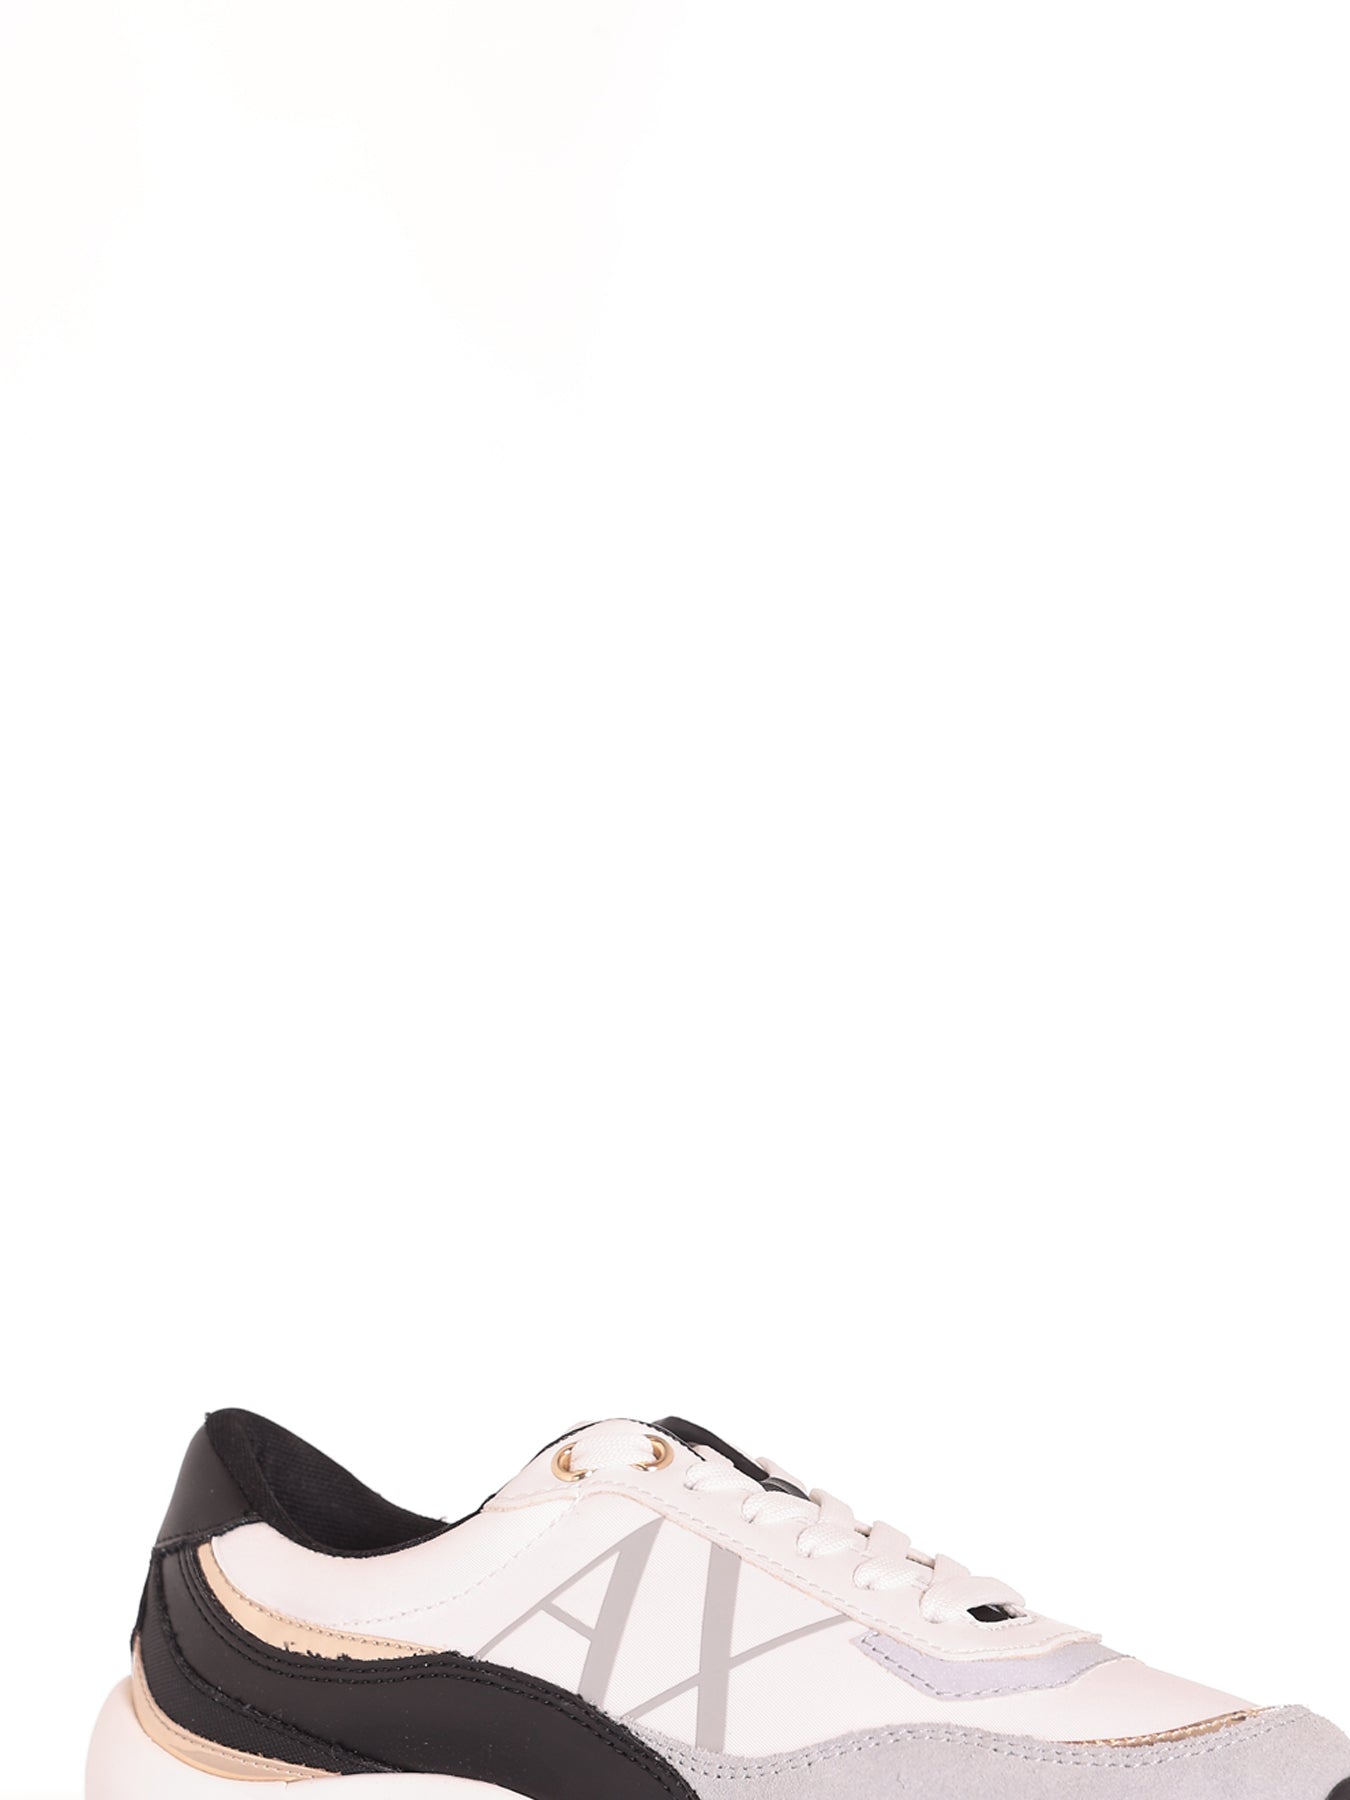 Sneakers Xdx100 Optic WhitE-Grey